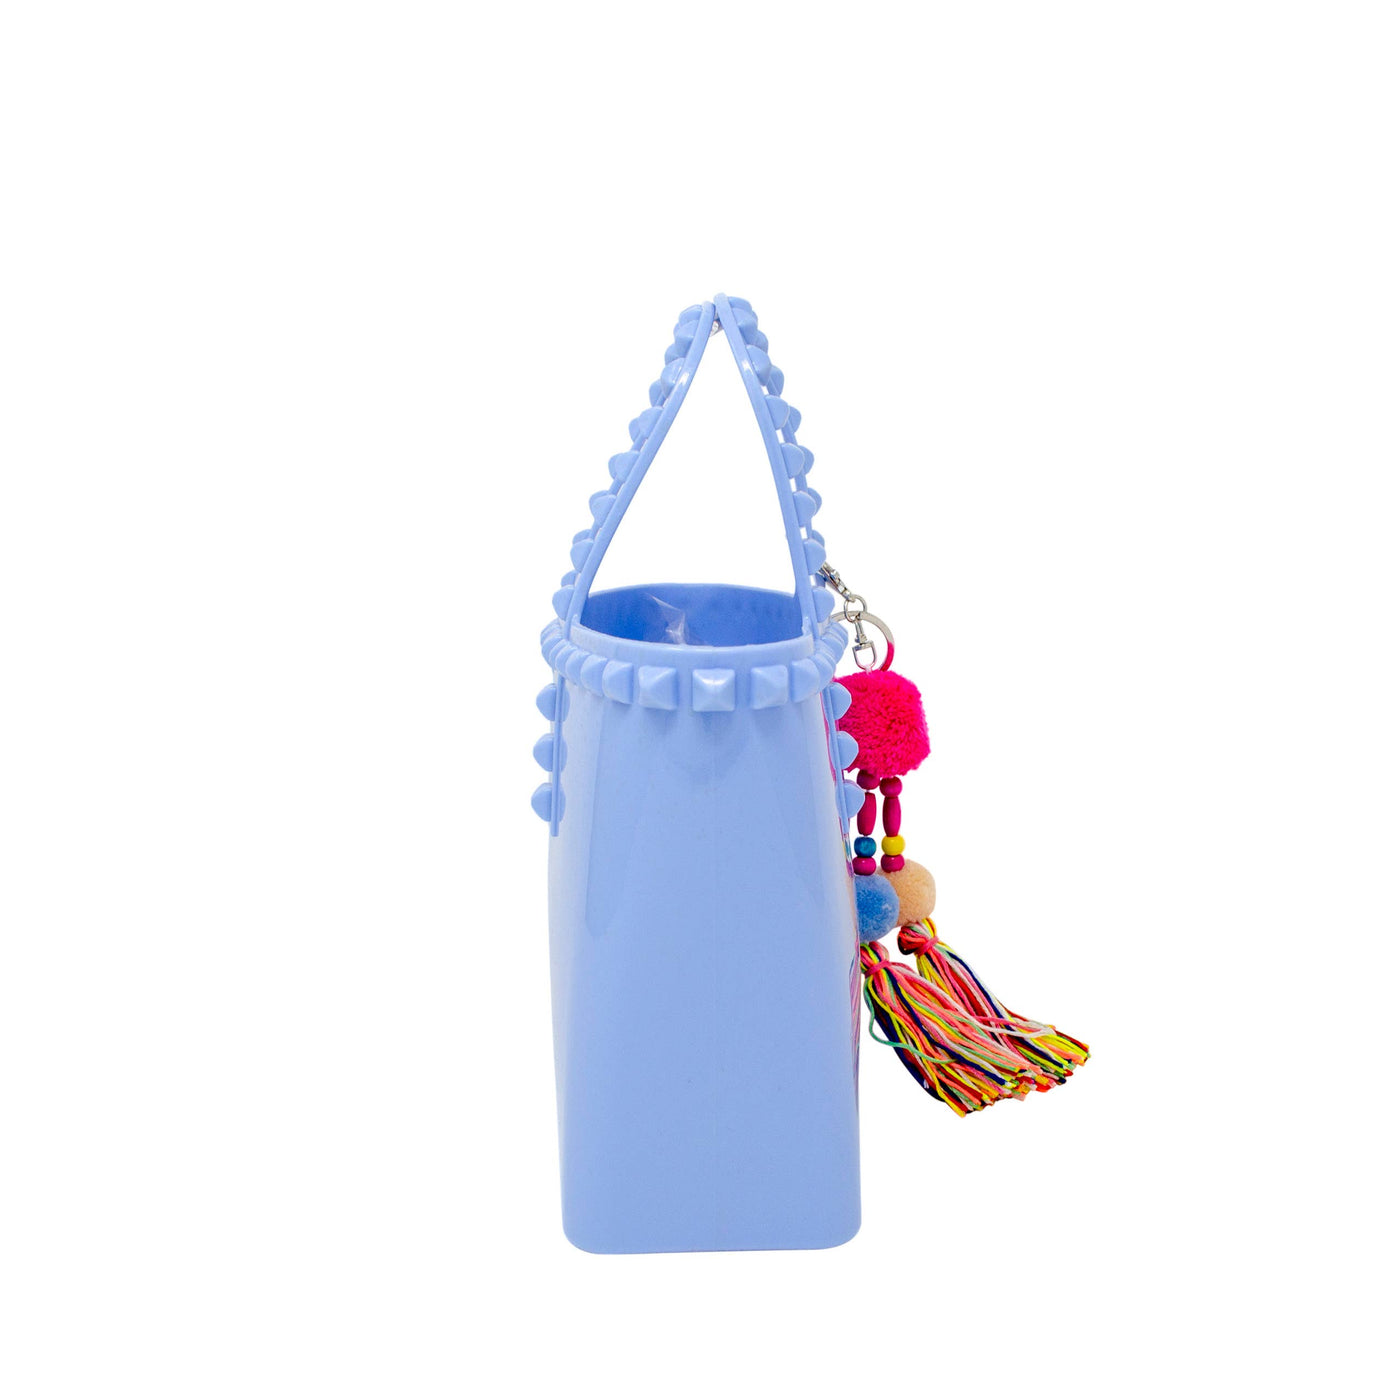 Tiny Jelly Tote Bag: Baby Blue